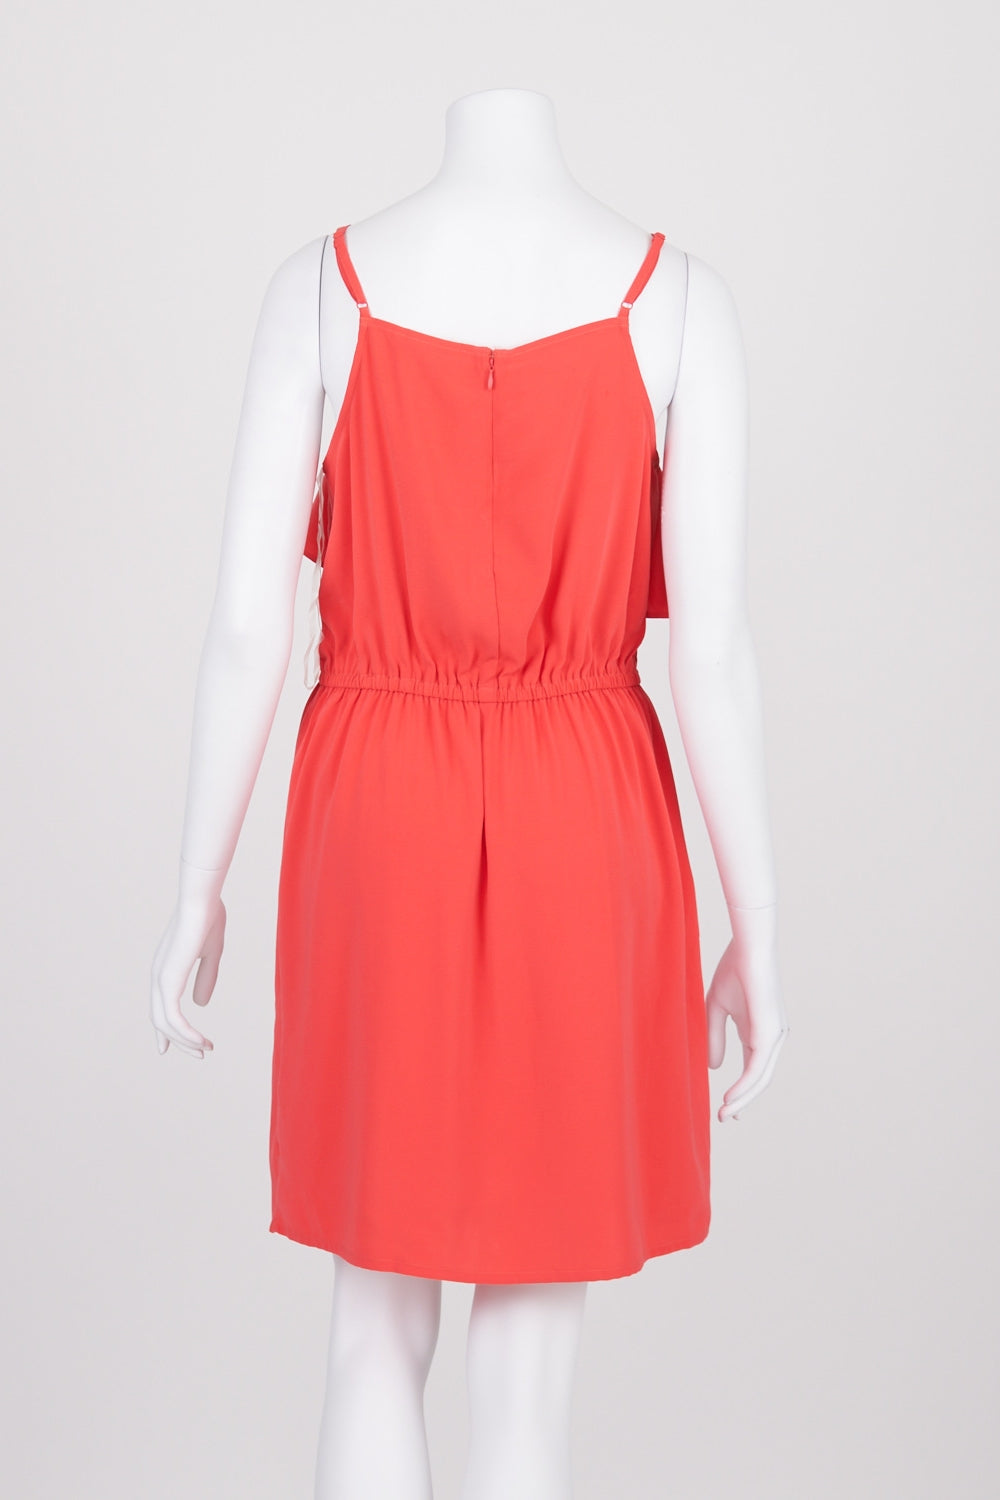 Jeanswest Pink Ruffle Detail Dress 10